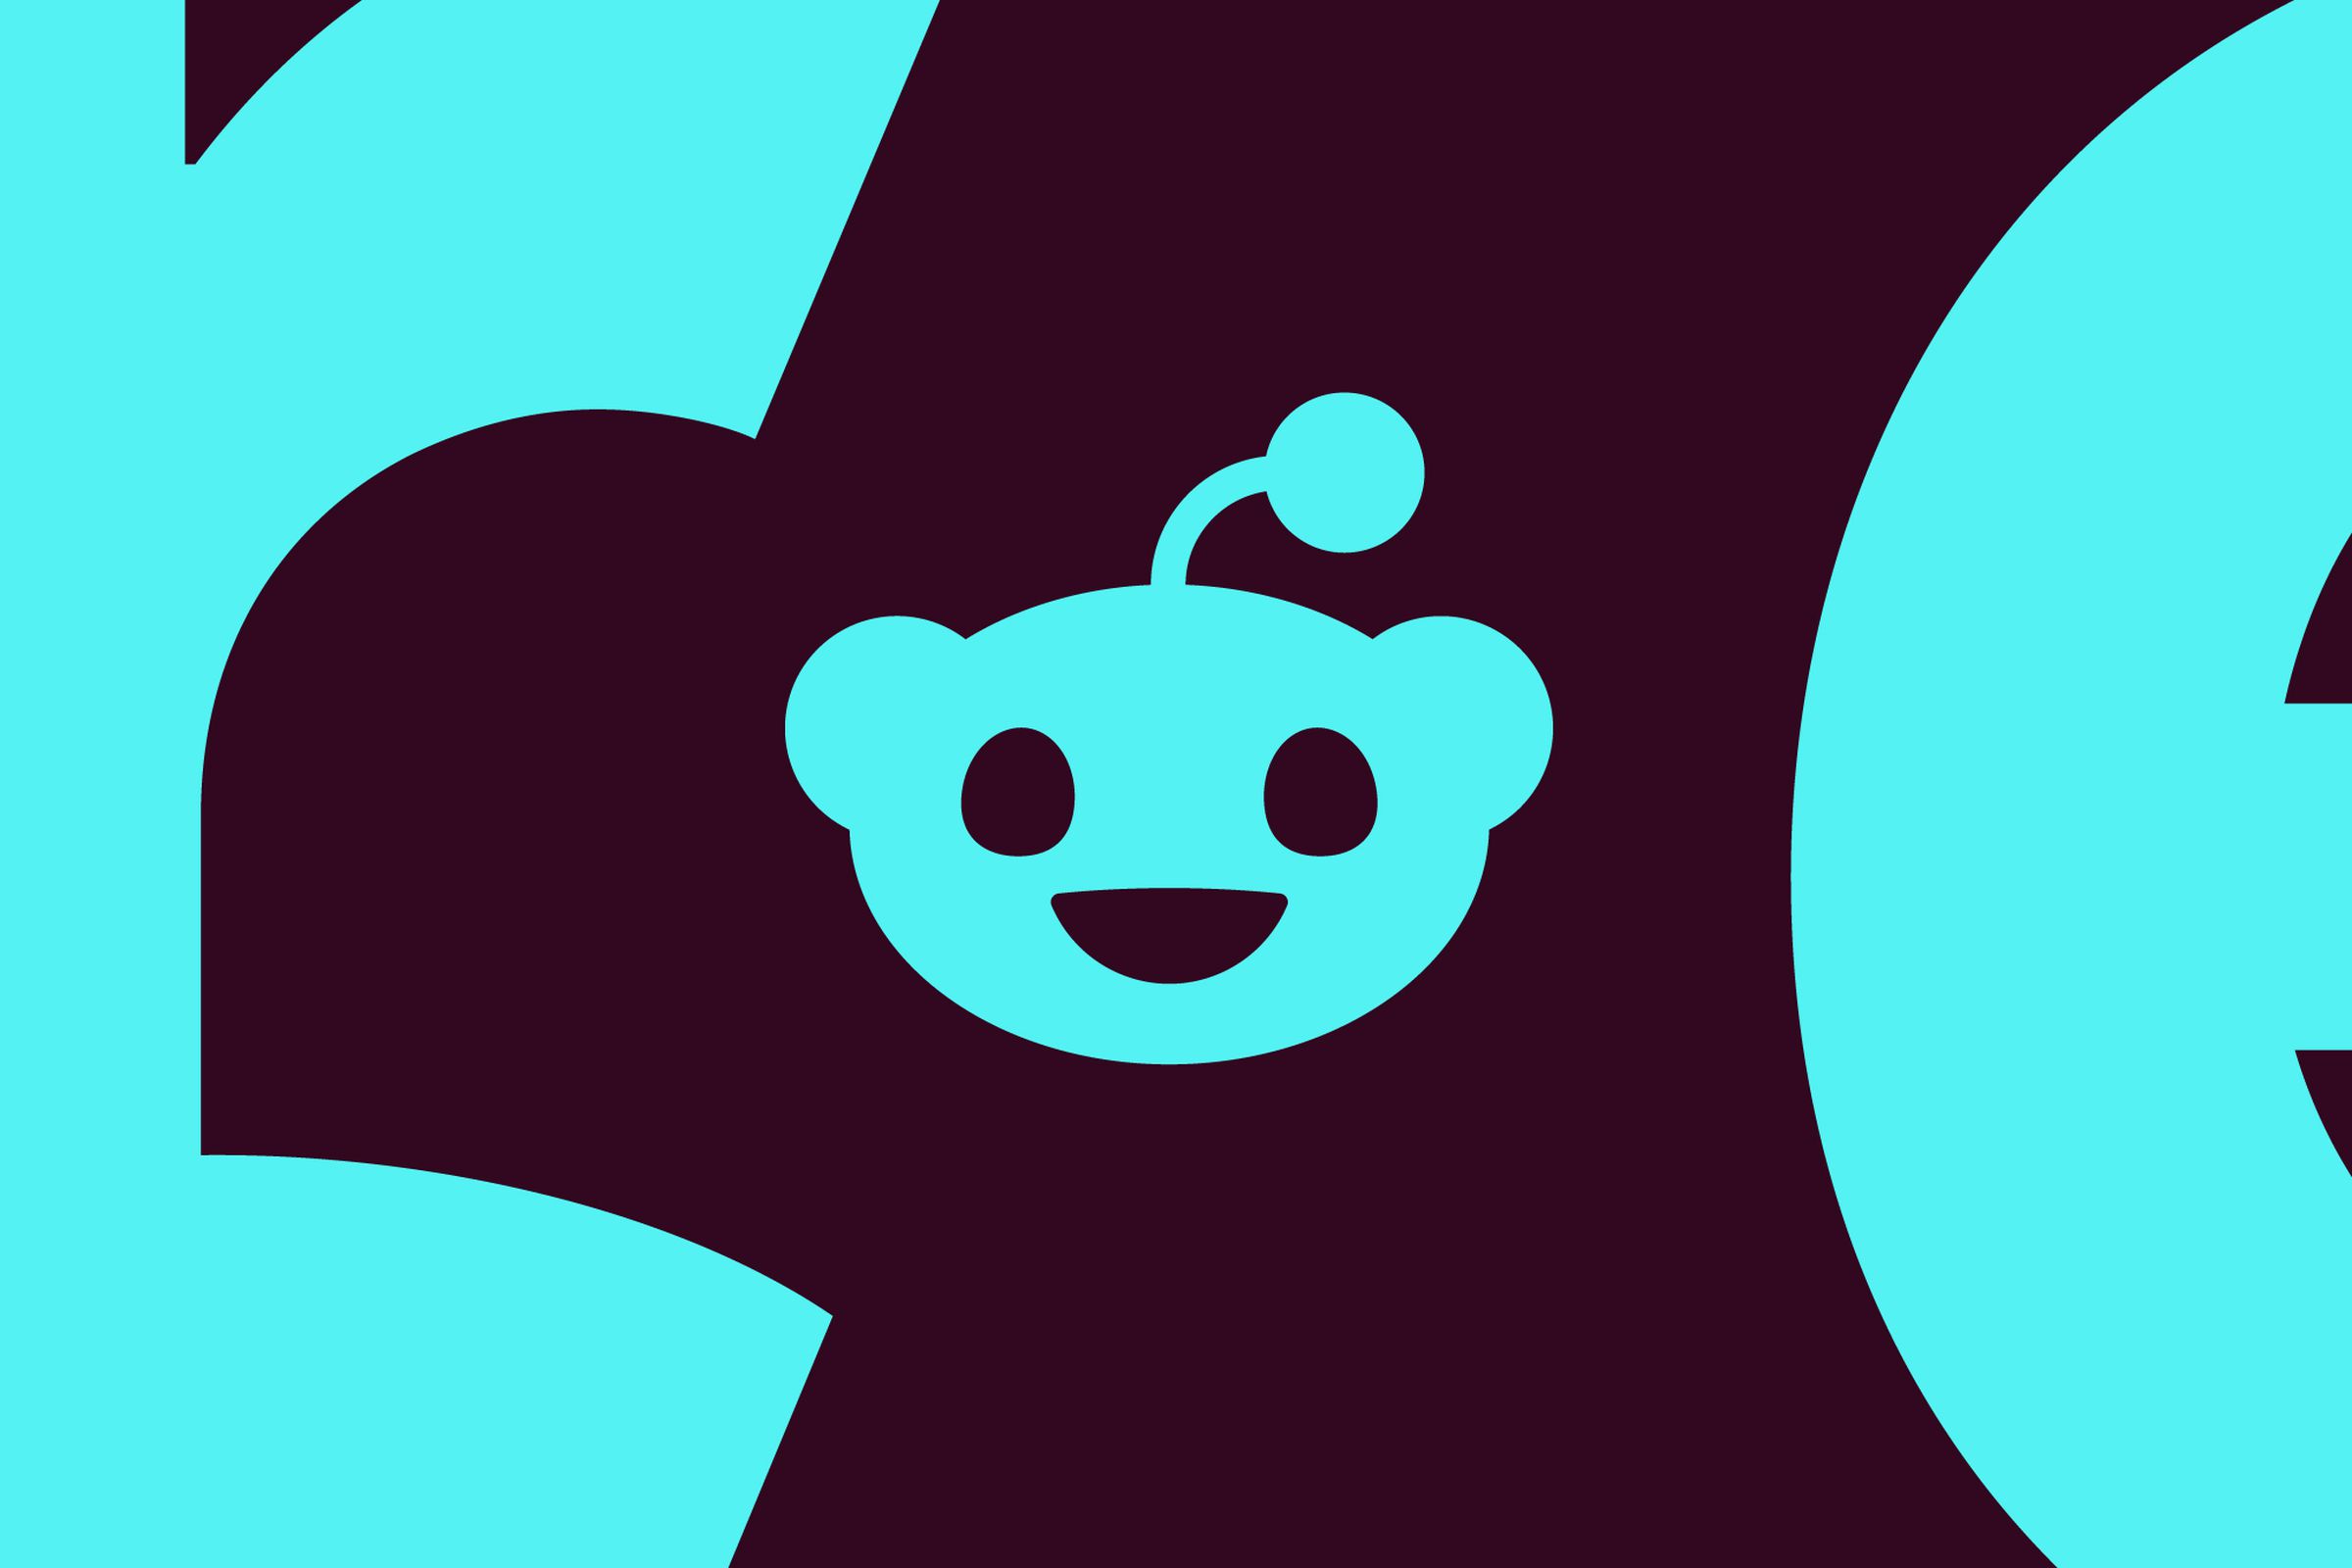 An illustration of the Reddit logo.